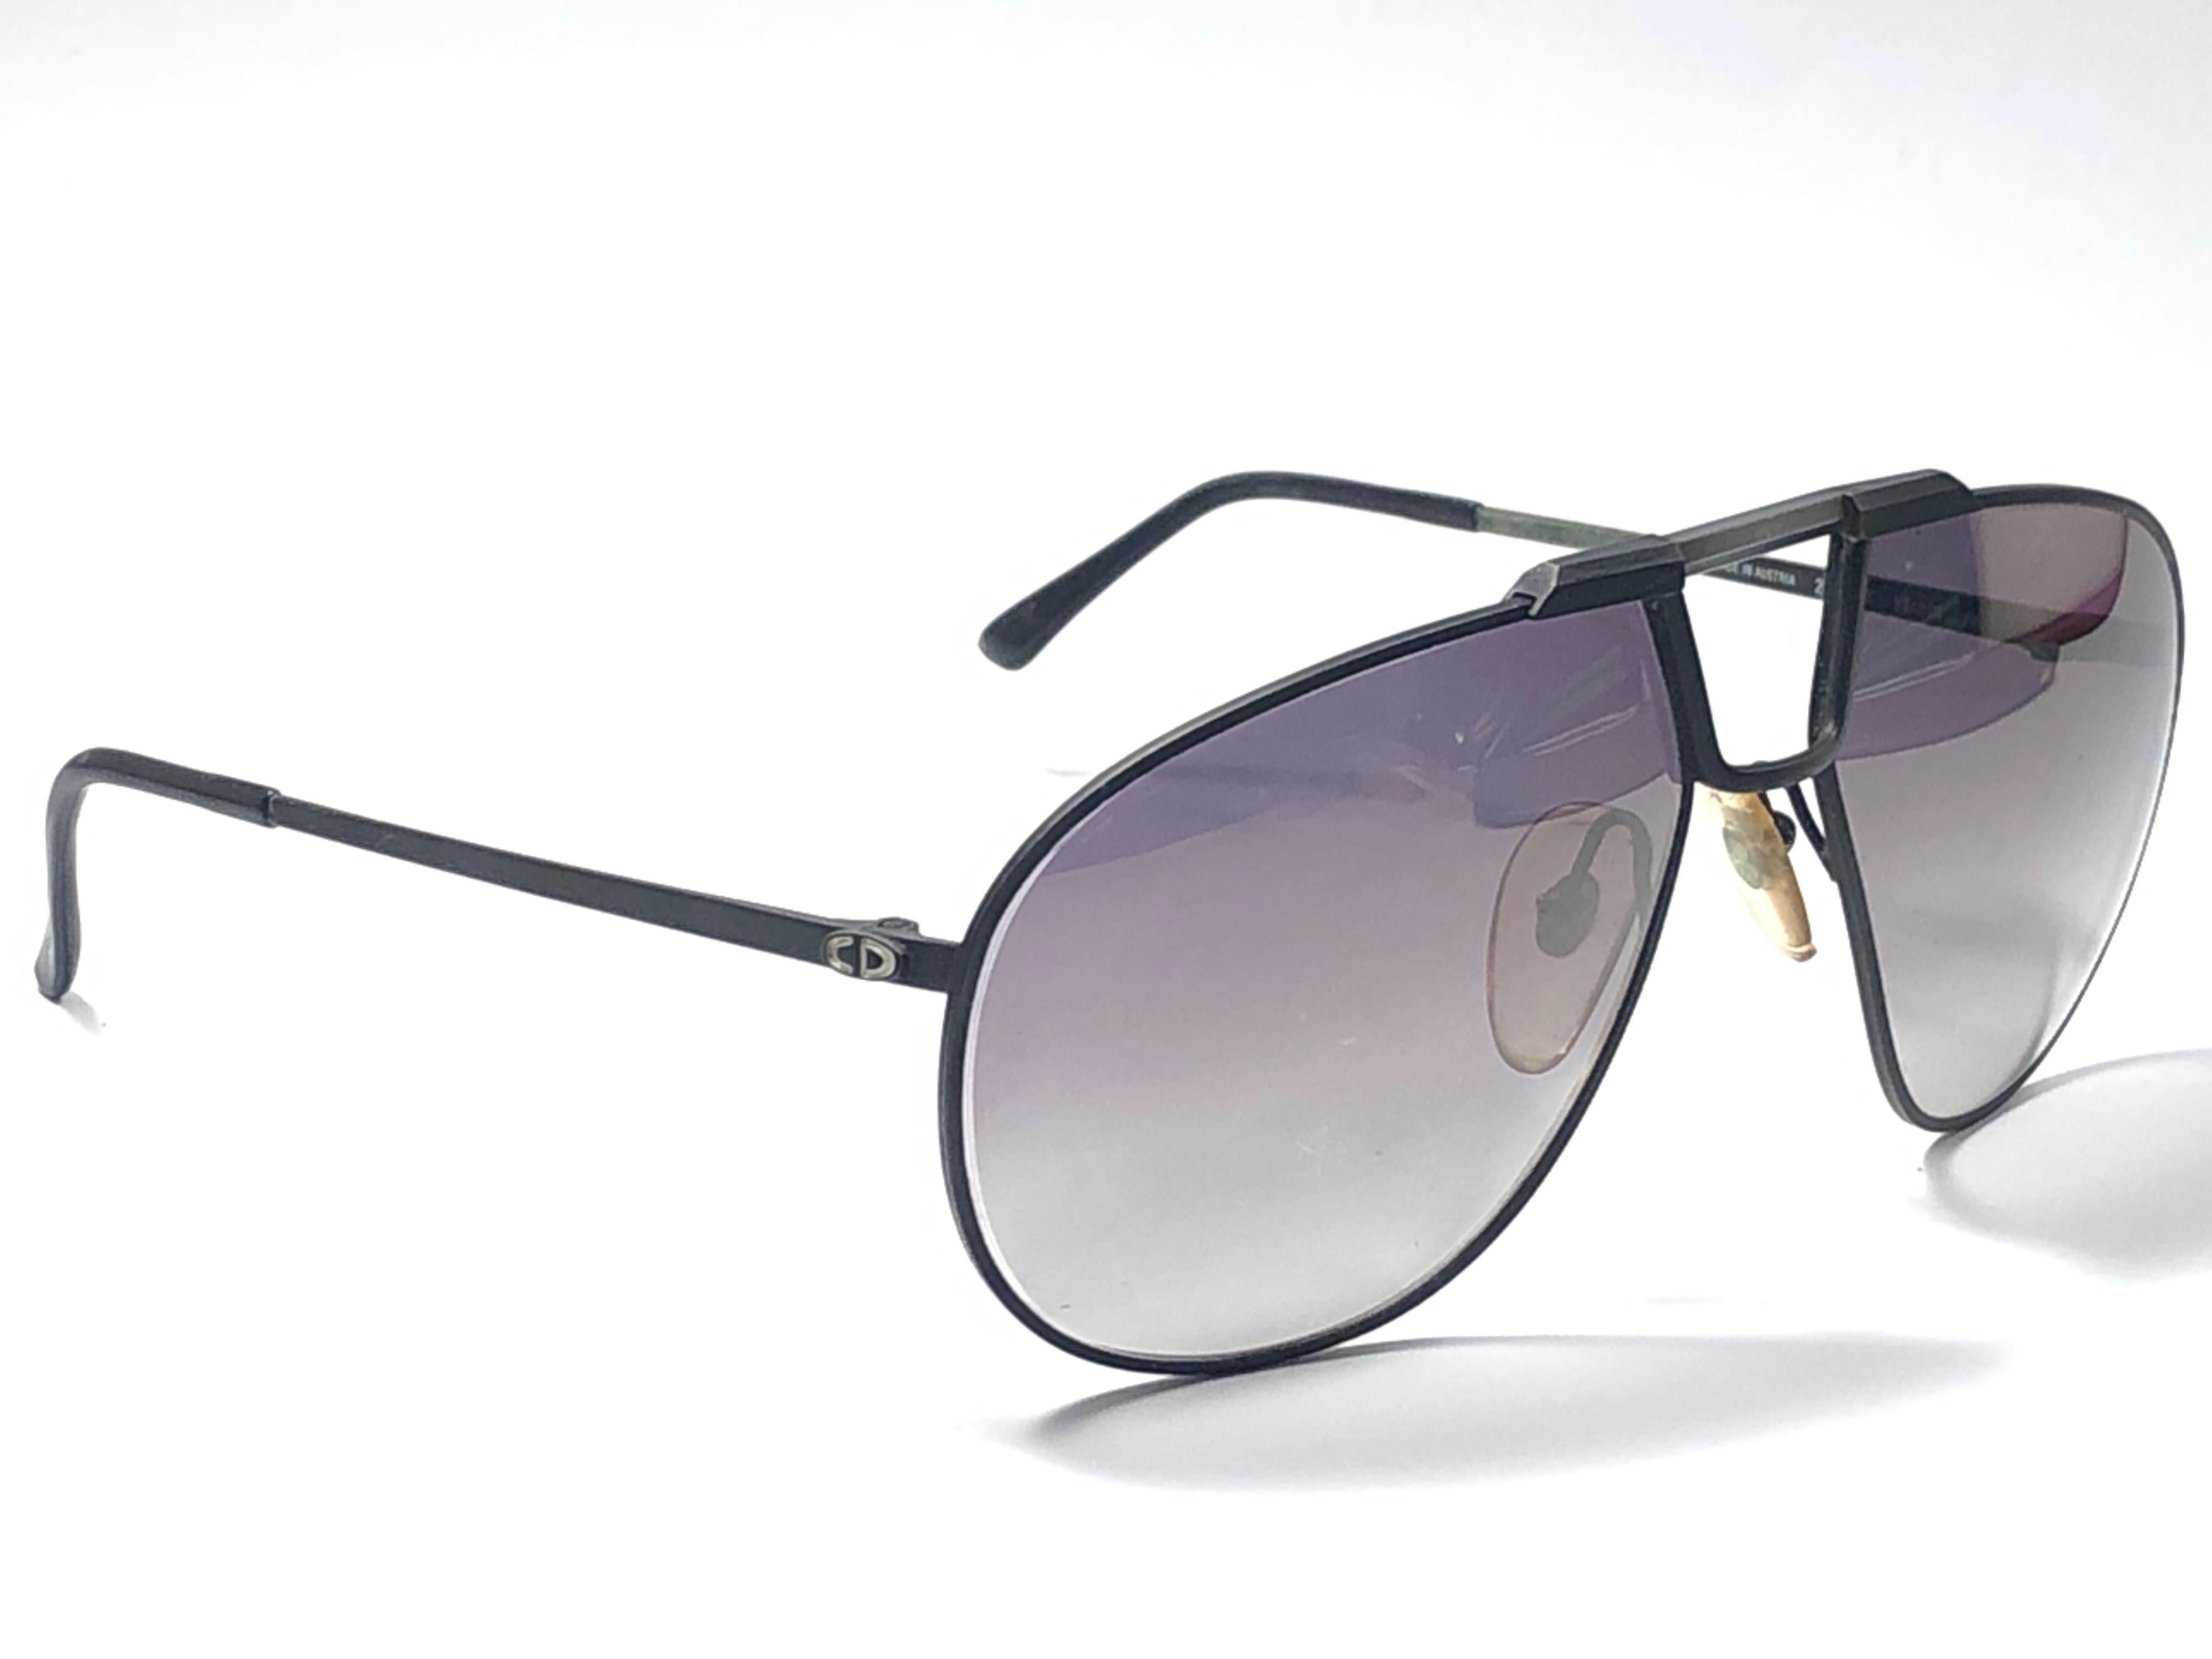 DIOR sunglasses for women  Gold  Dior sunglasses DIORMONSIEUR2 online on  GIGLIOCOM